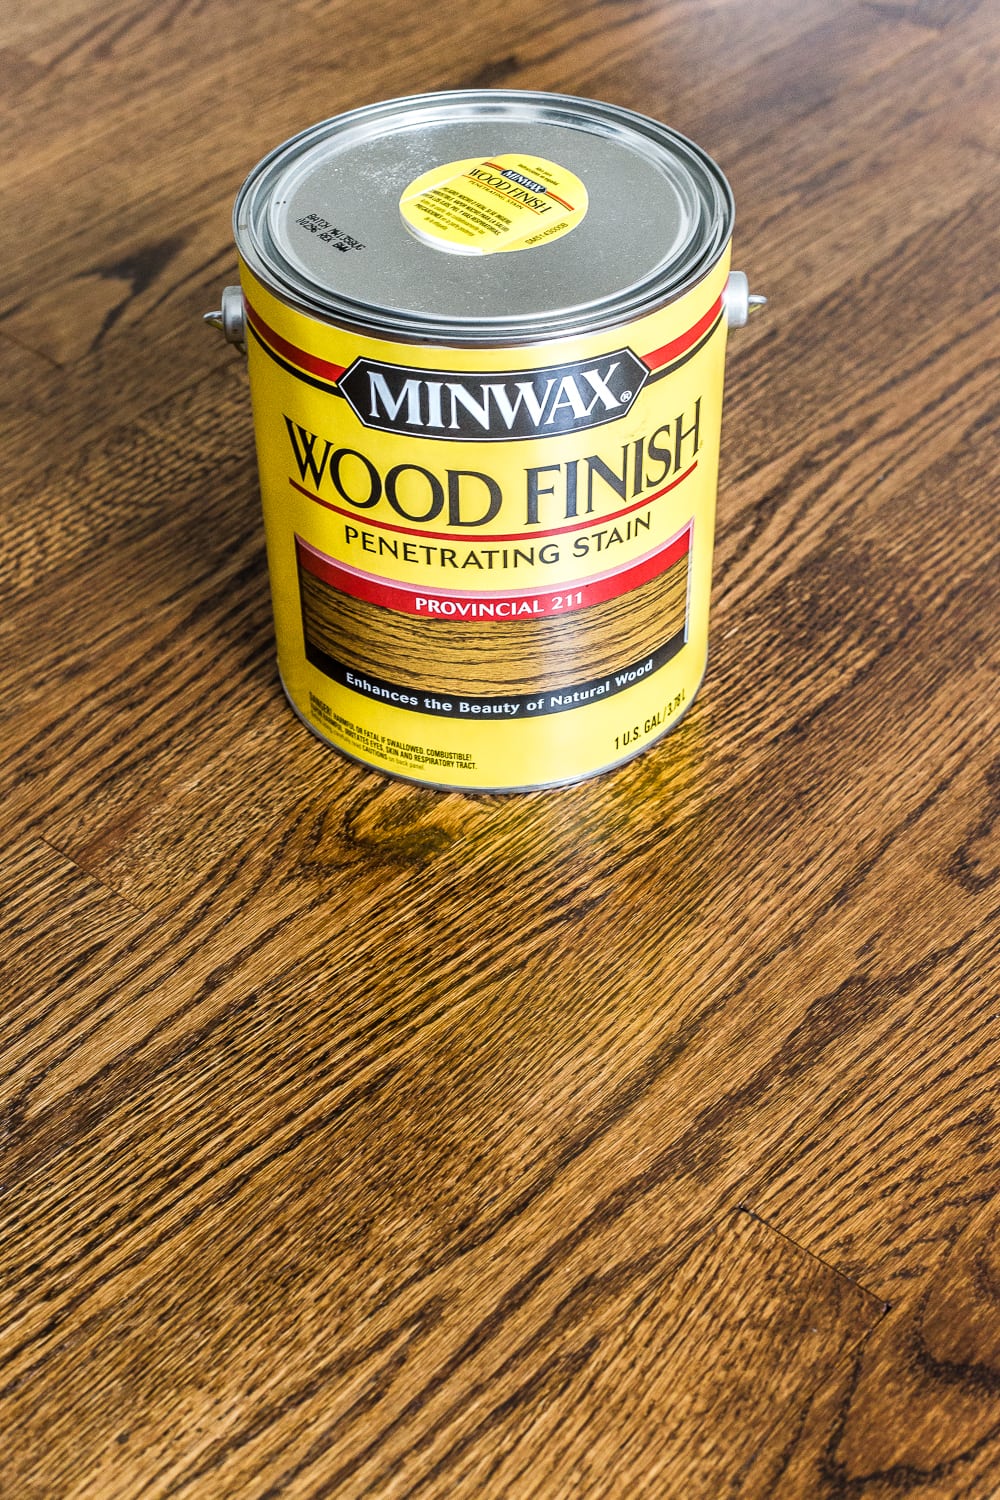 Refinish Hardwood Floors, Minwax Hardwood Floor Stain Colors